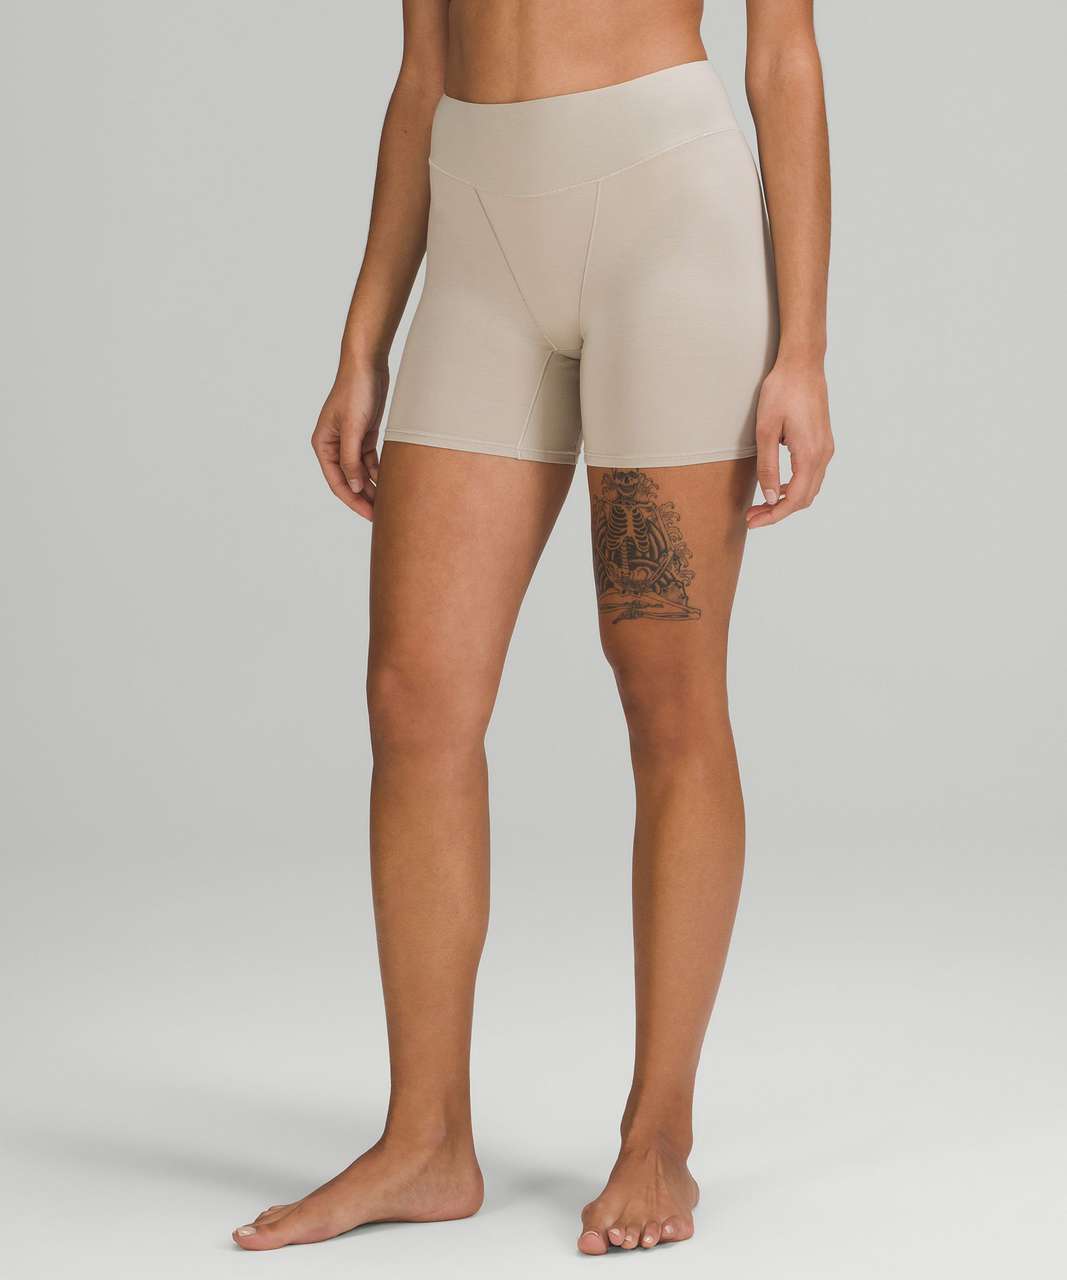 https://storage.googleapis.com/lulu-fanatics/product/69233/1280/lululemon-underease-super-high-rise-shortie-underwear-raw-linen-048432-374734.jpg